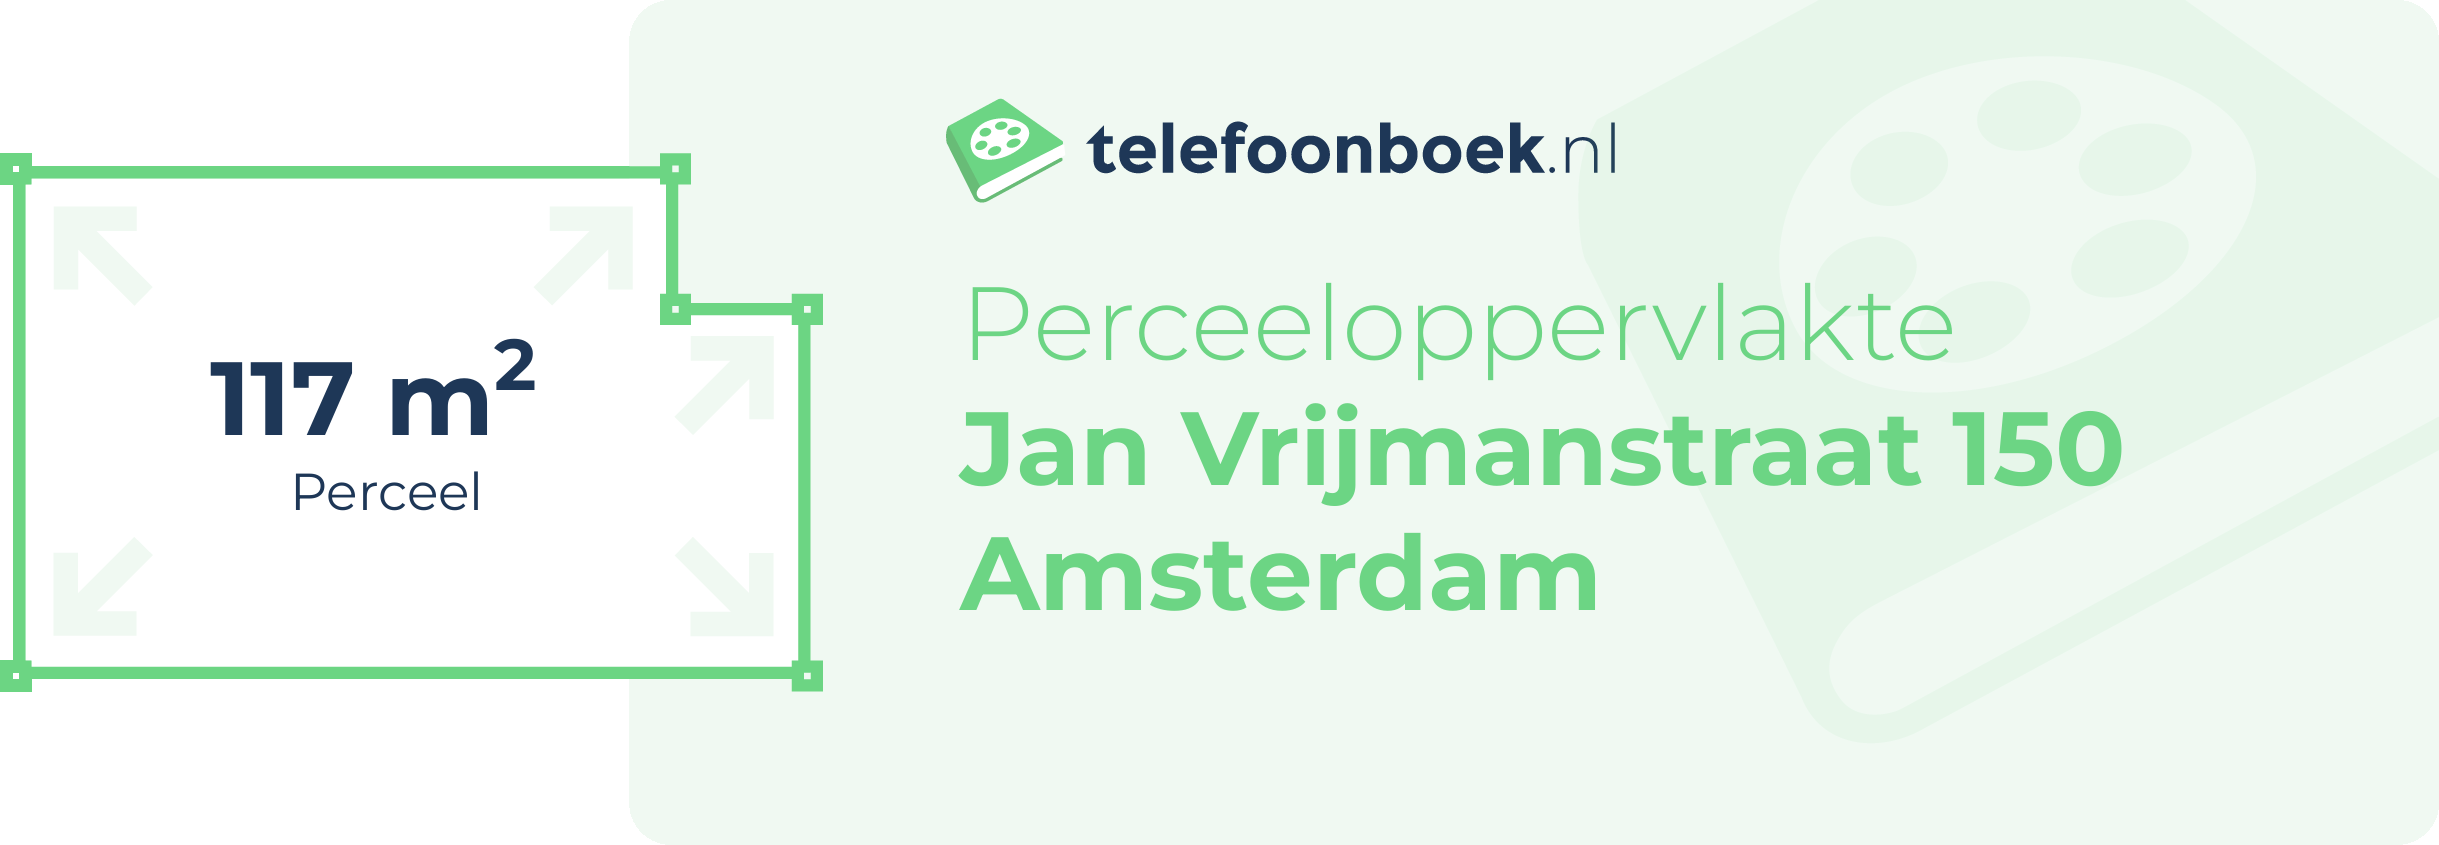 Perceeloppervlakte Jan Vrijmanstraat 150 Amsterdam